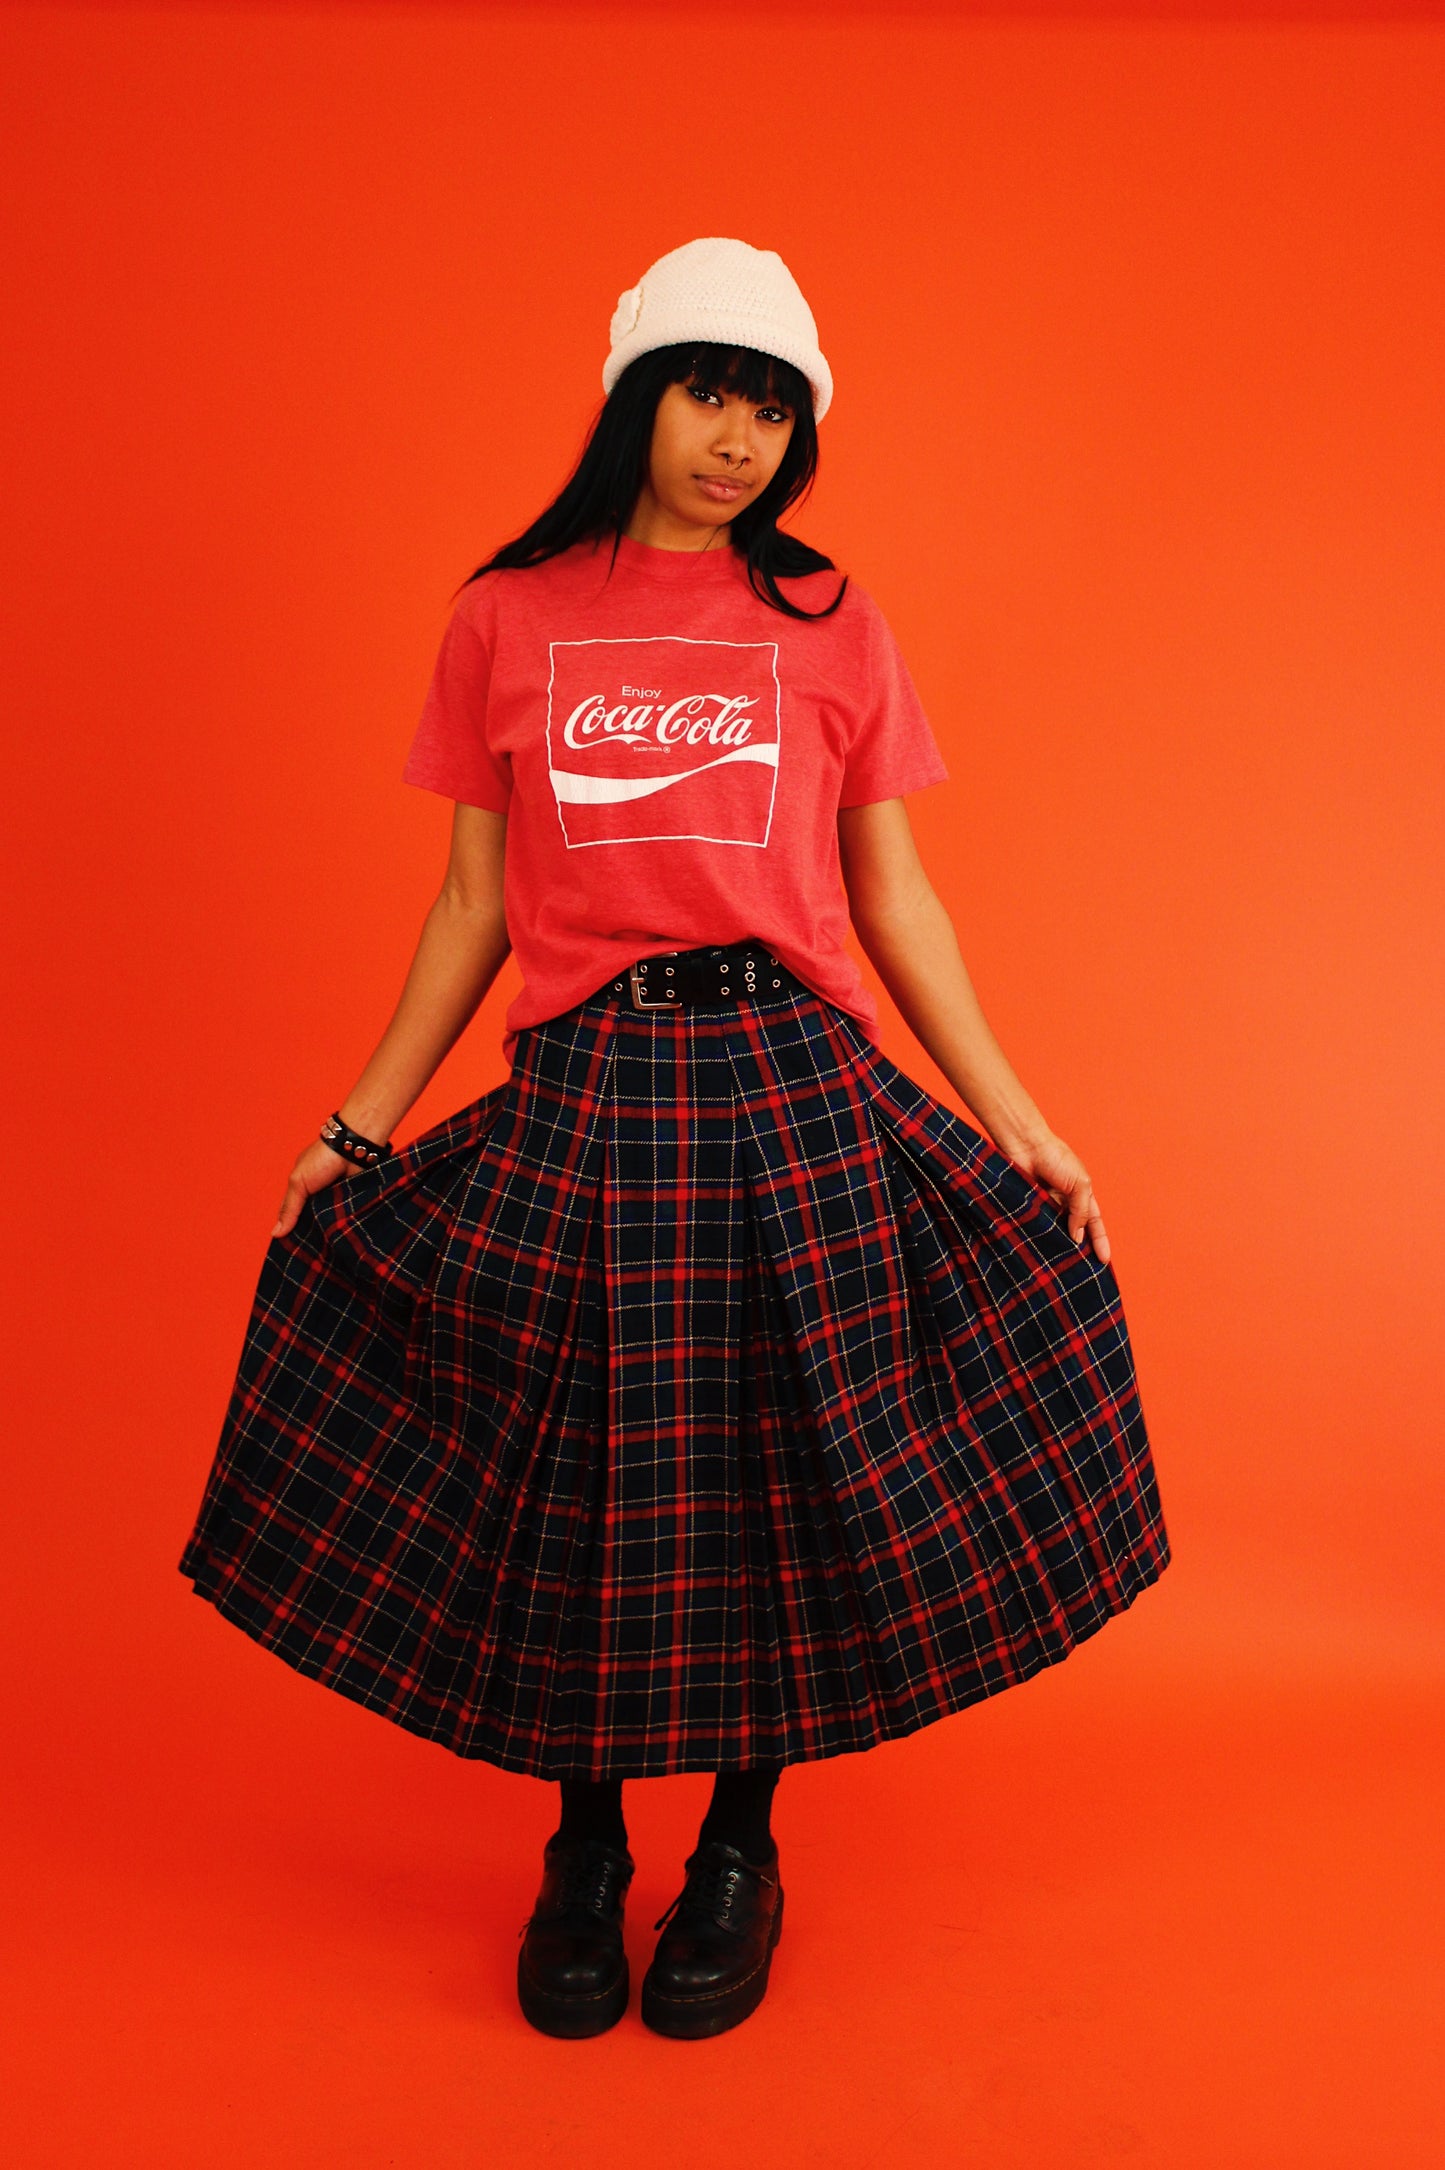 1980s Plaid Schoolgirl Skirt